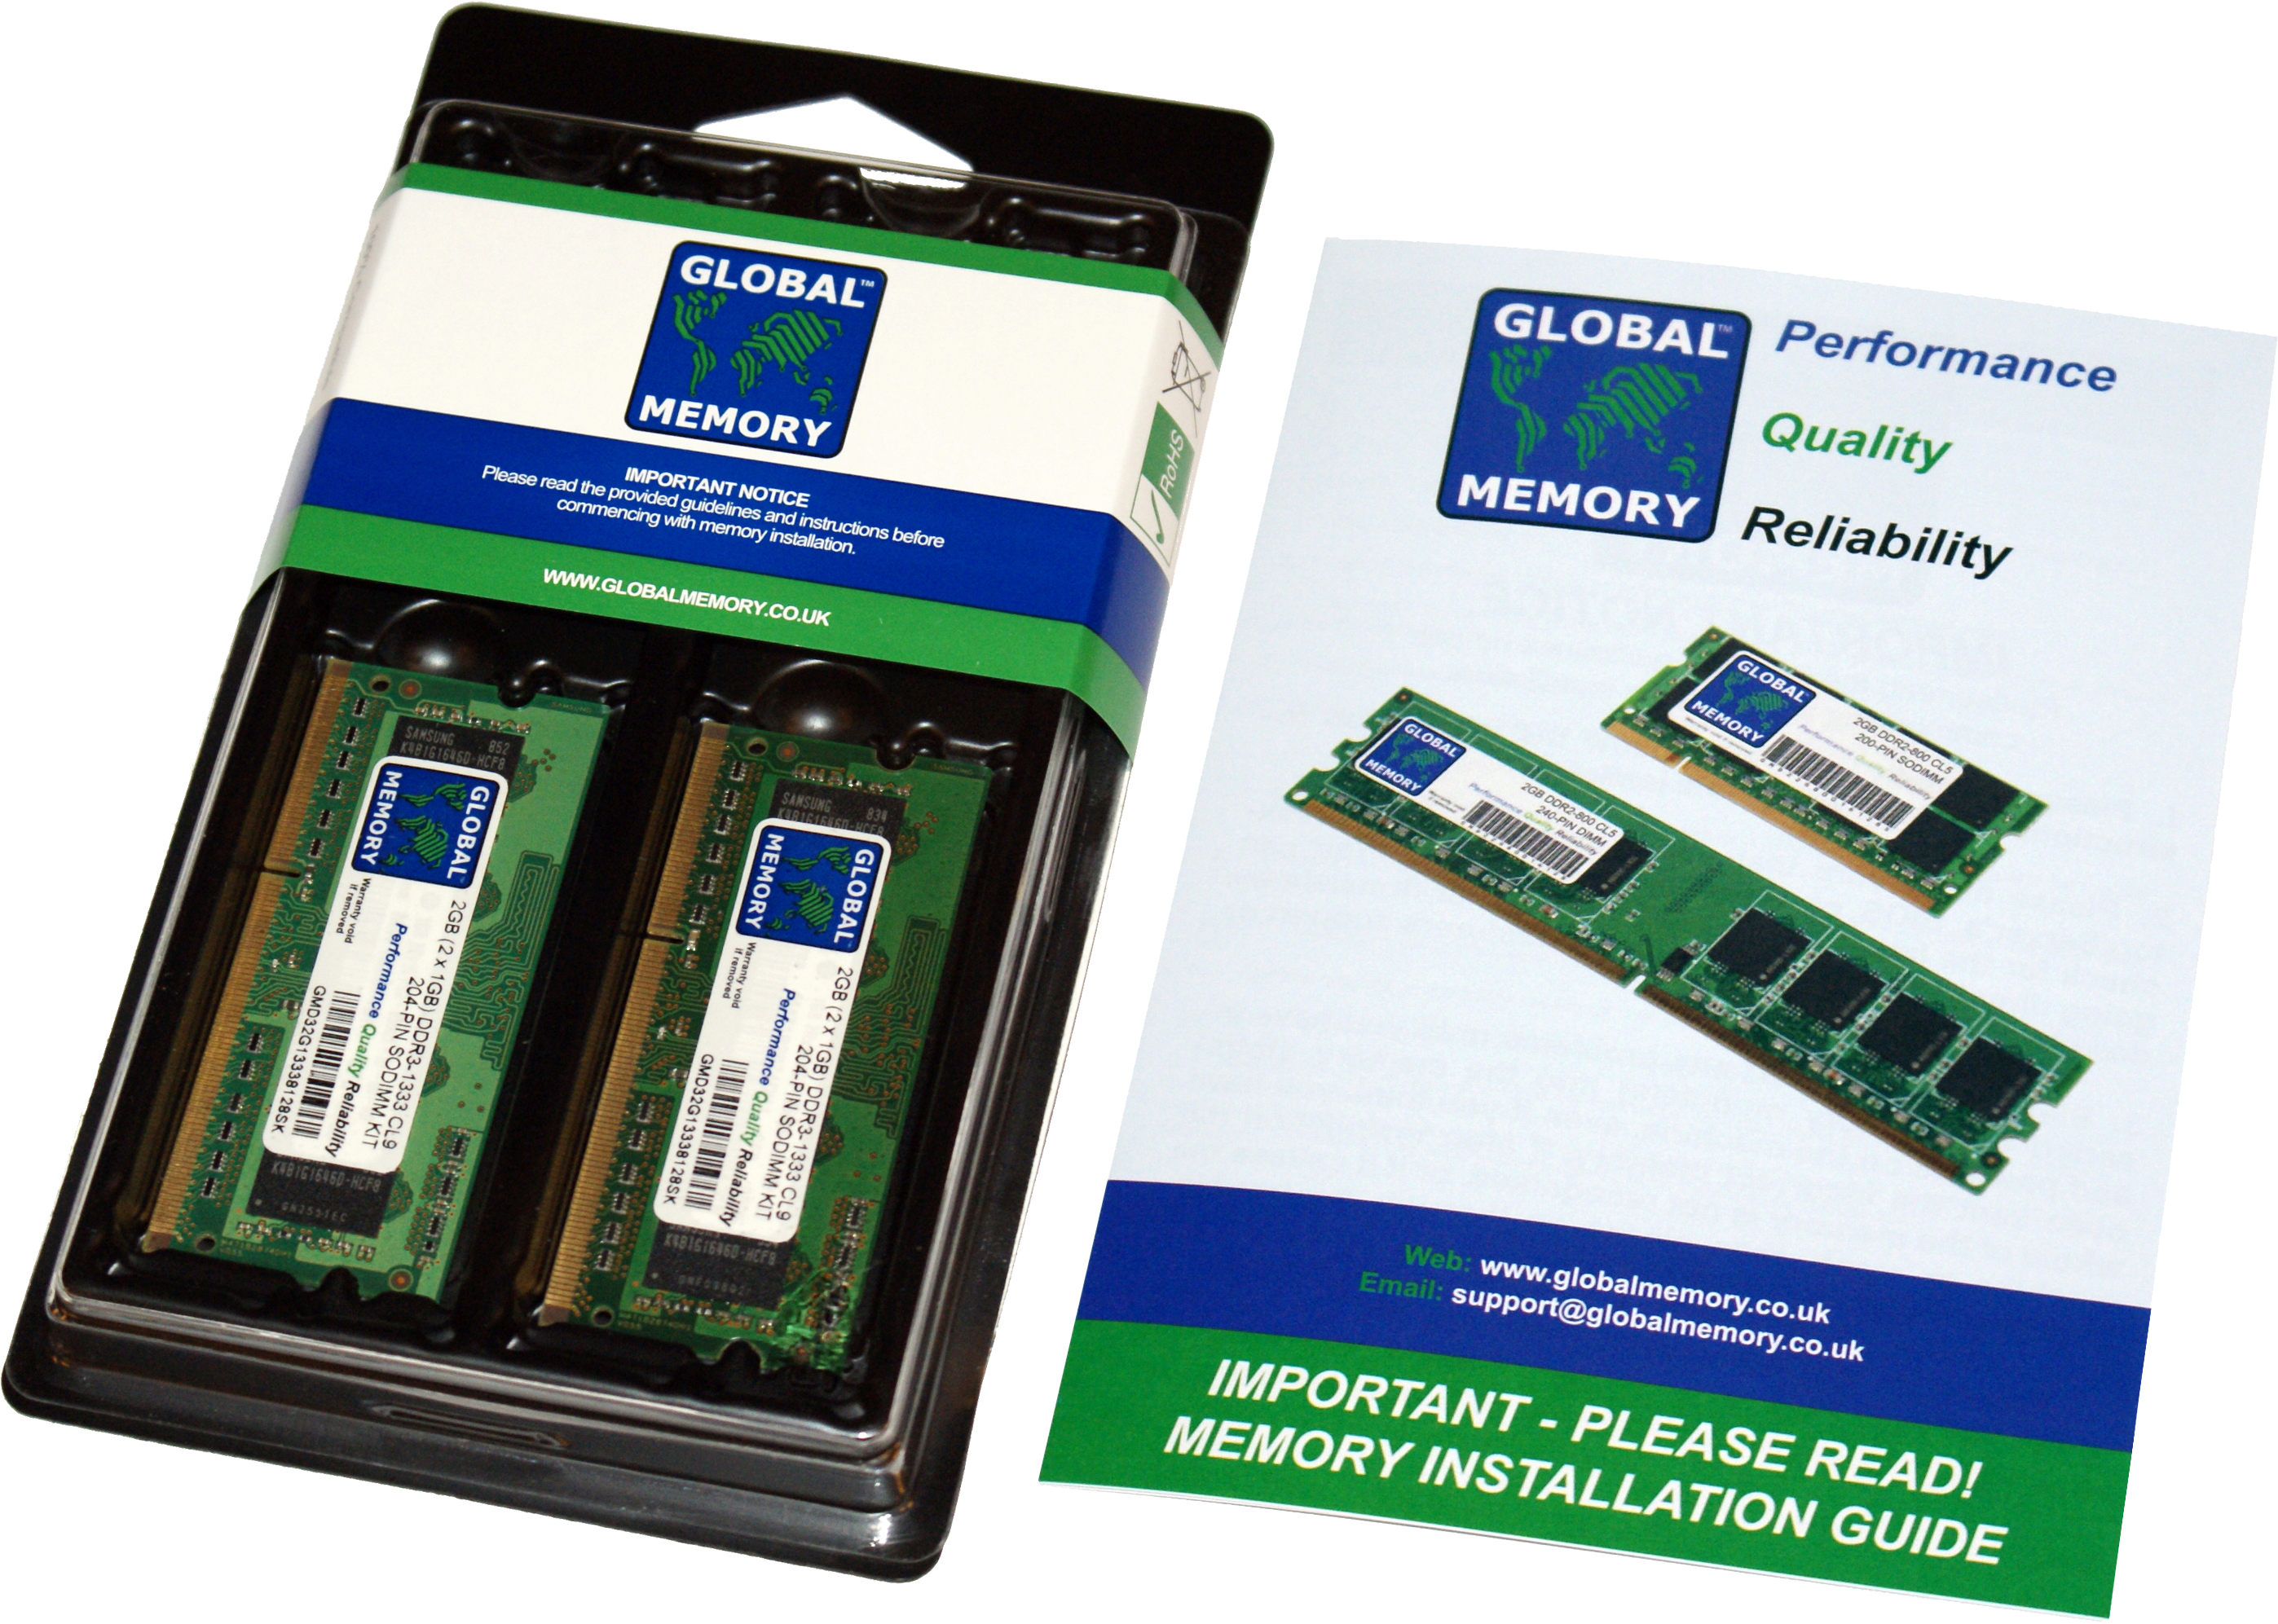 8GB (2 x 4GB) DDR4 2400MHz PC4-19200 260-PIN SODIMM MEMORY RAM KIT FOR LAPTOPS/NOTEBOOKS